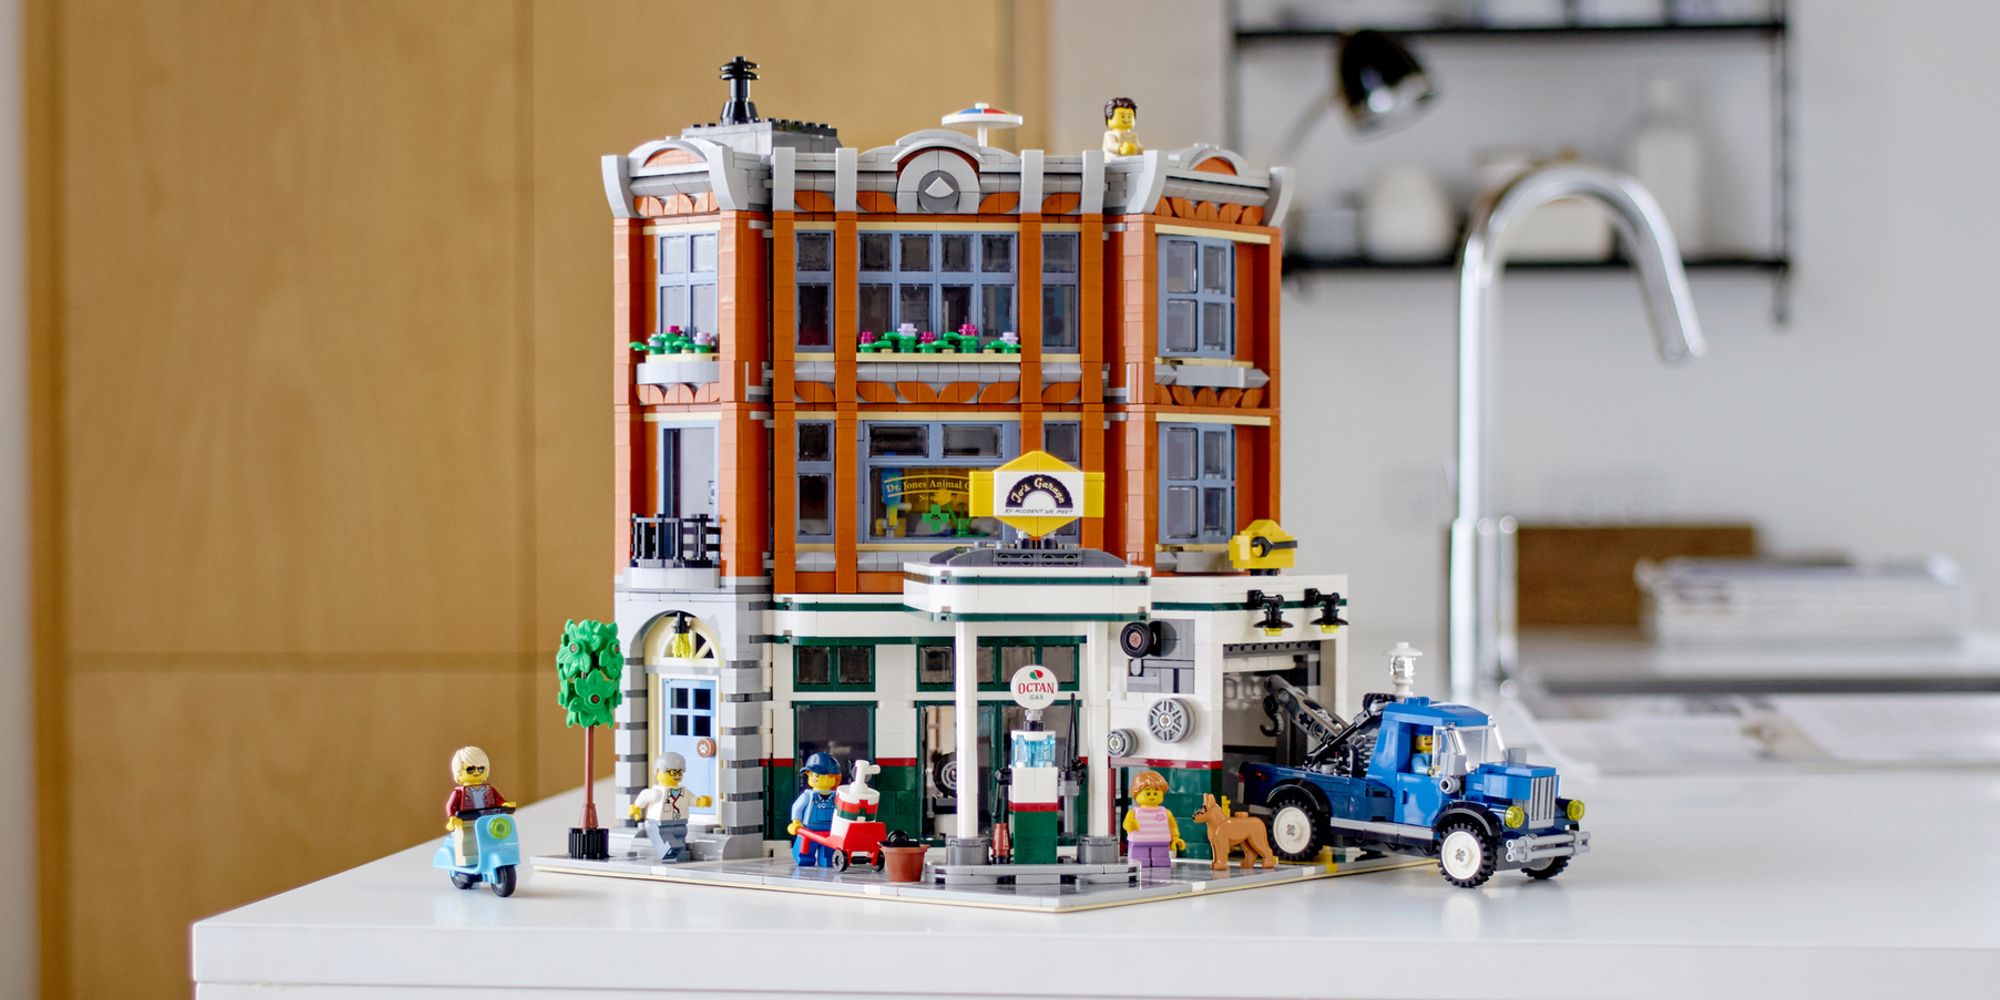 next lego modular building 2019